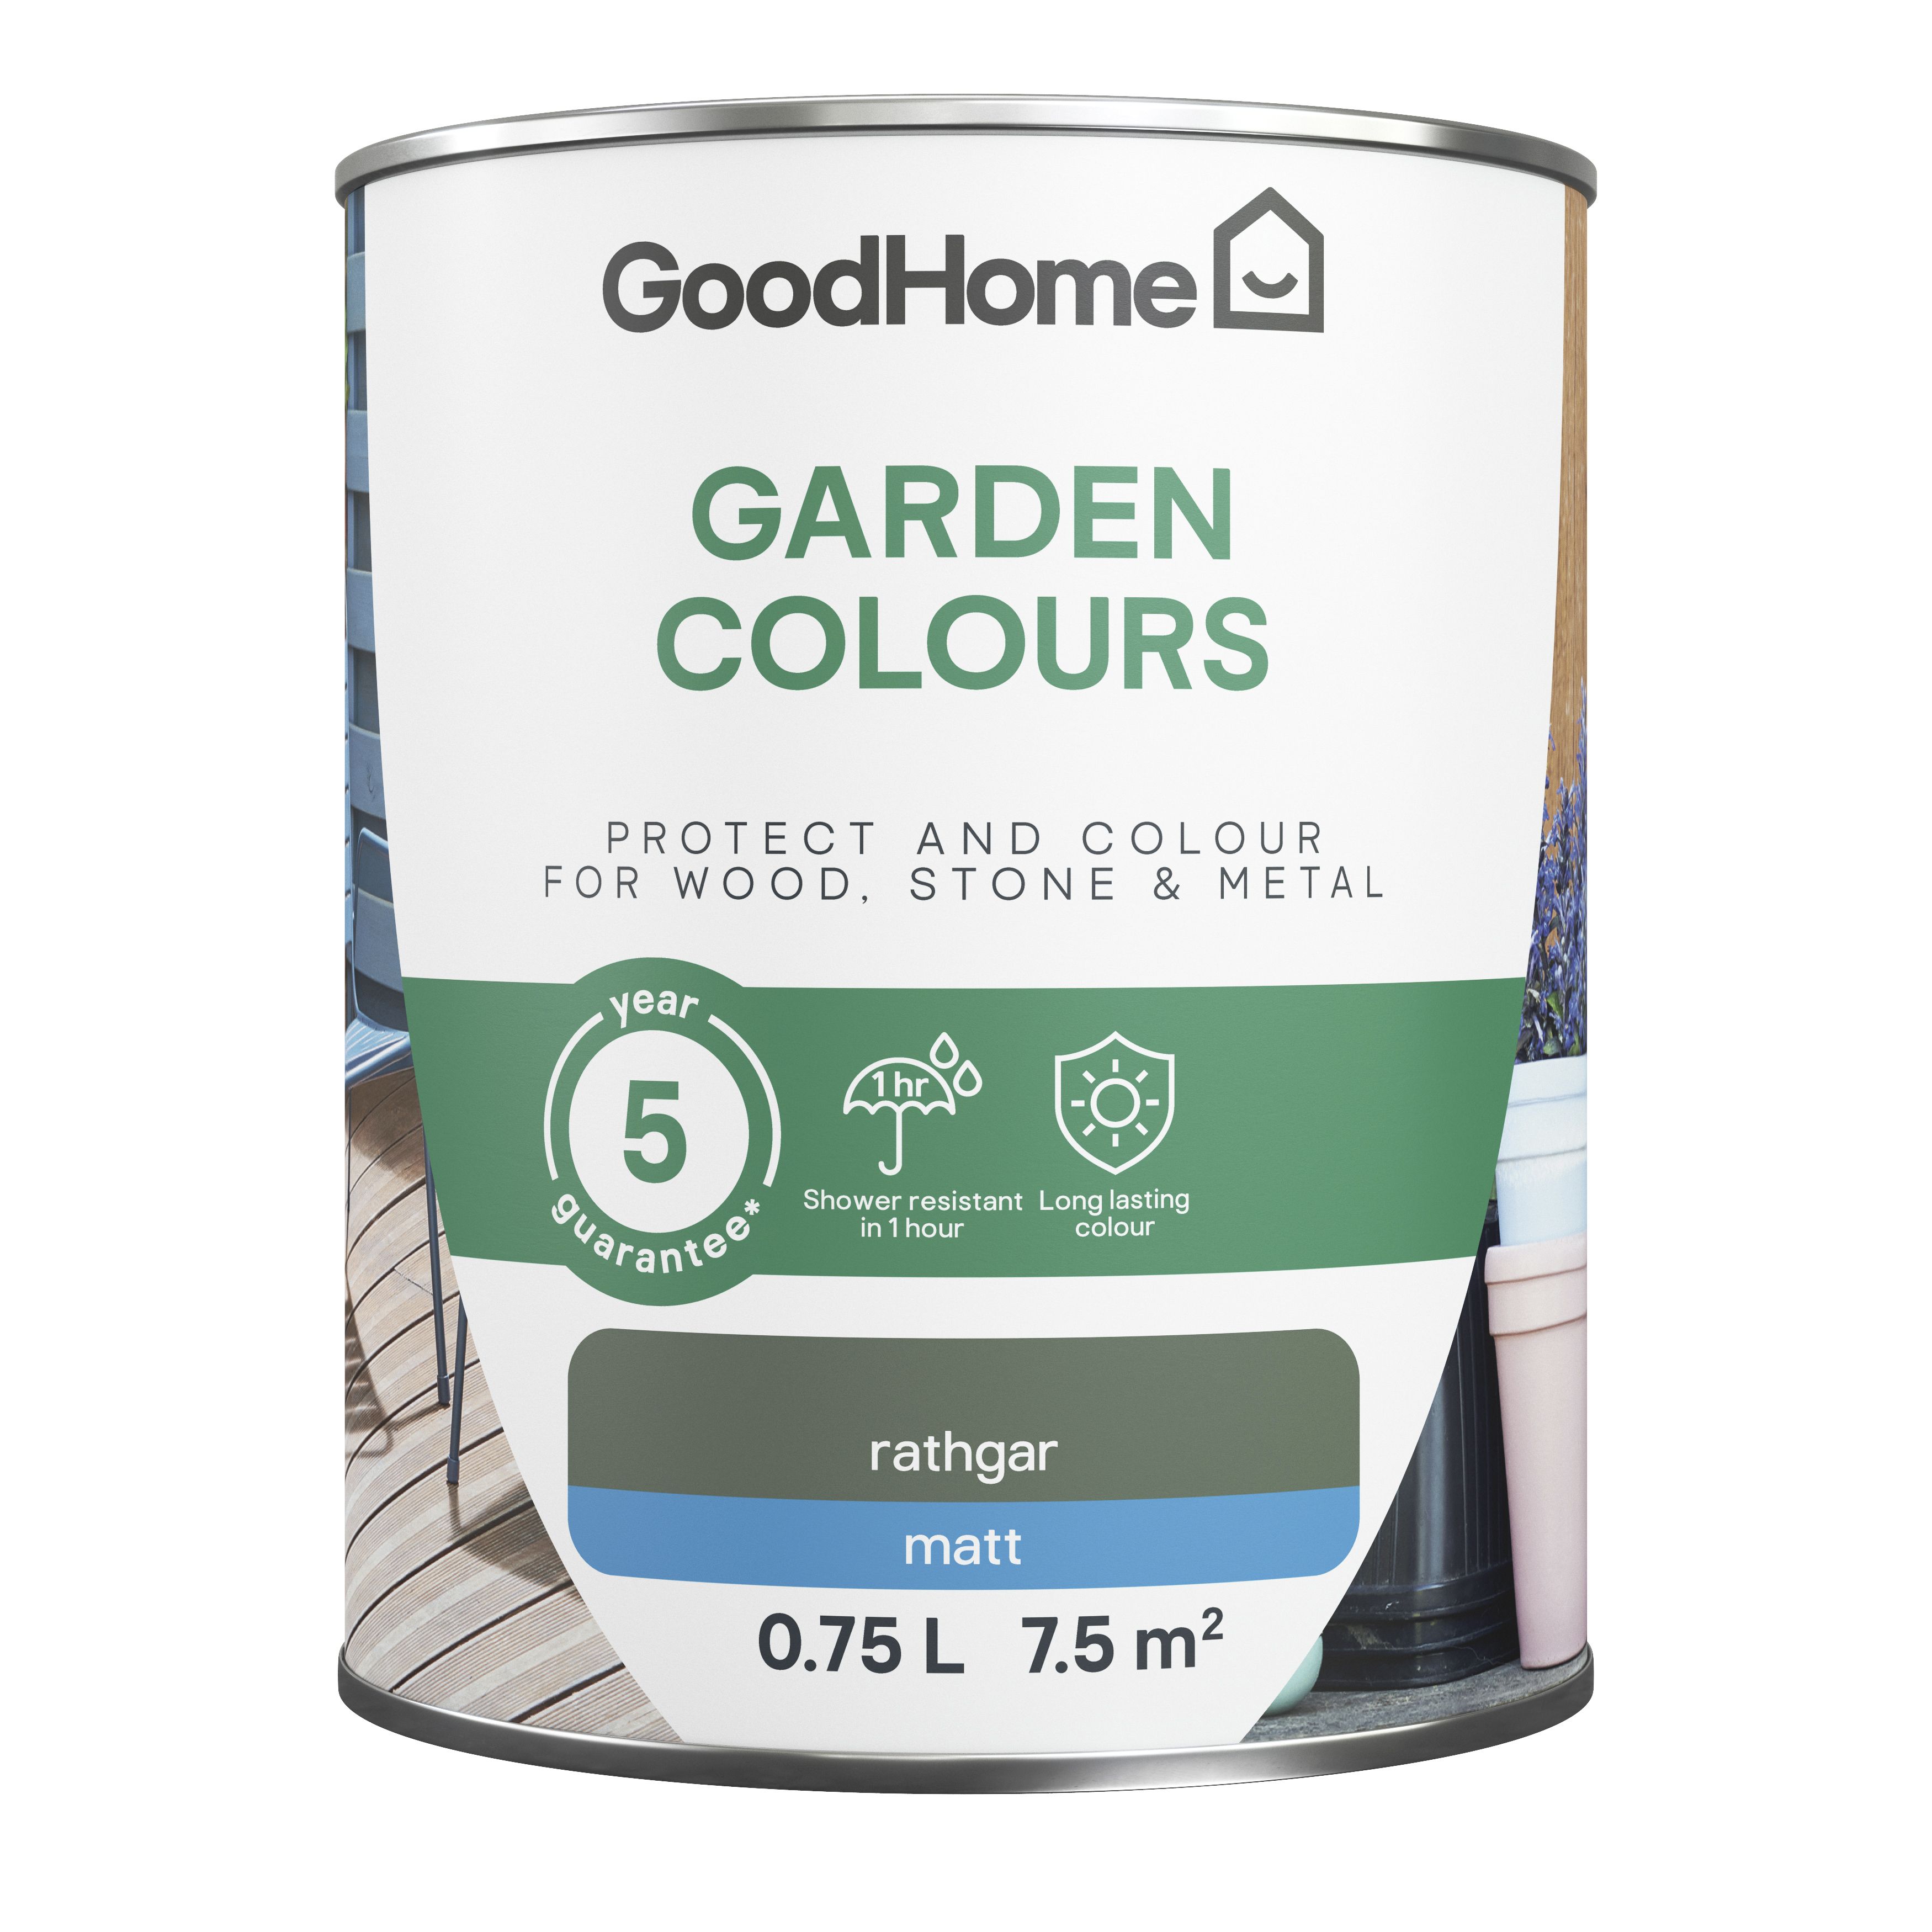 GoodHome Colour It Rathgar Matt Multi-surface paint, 750ml